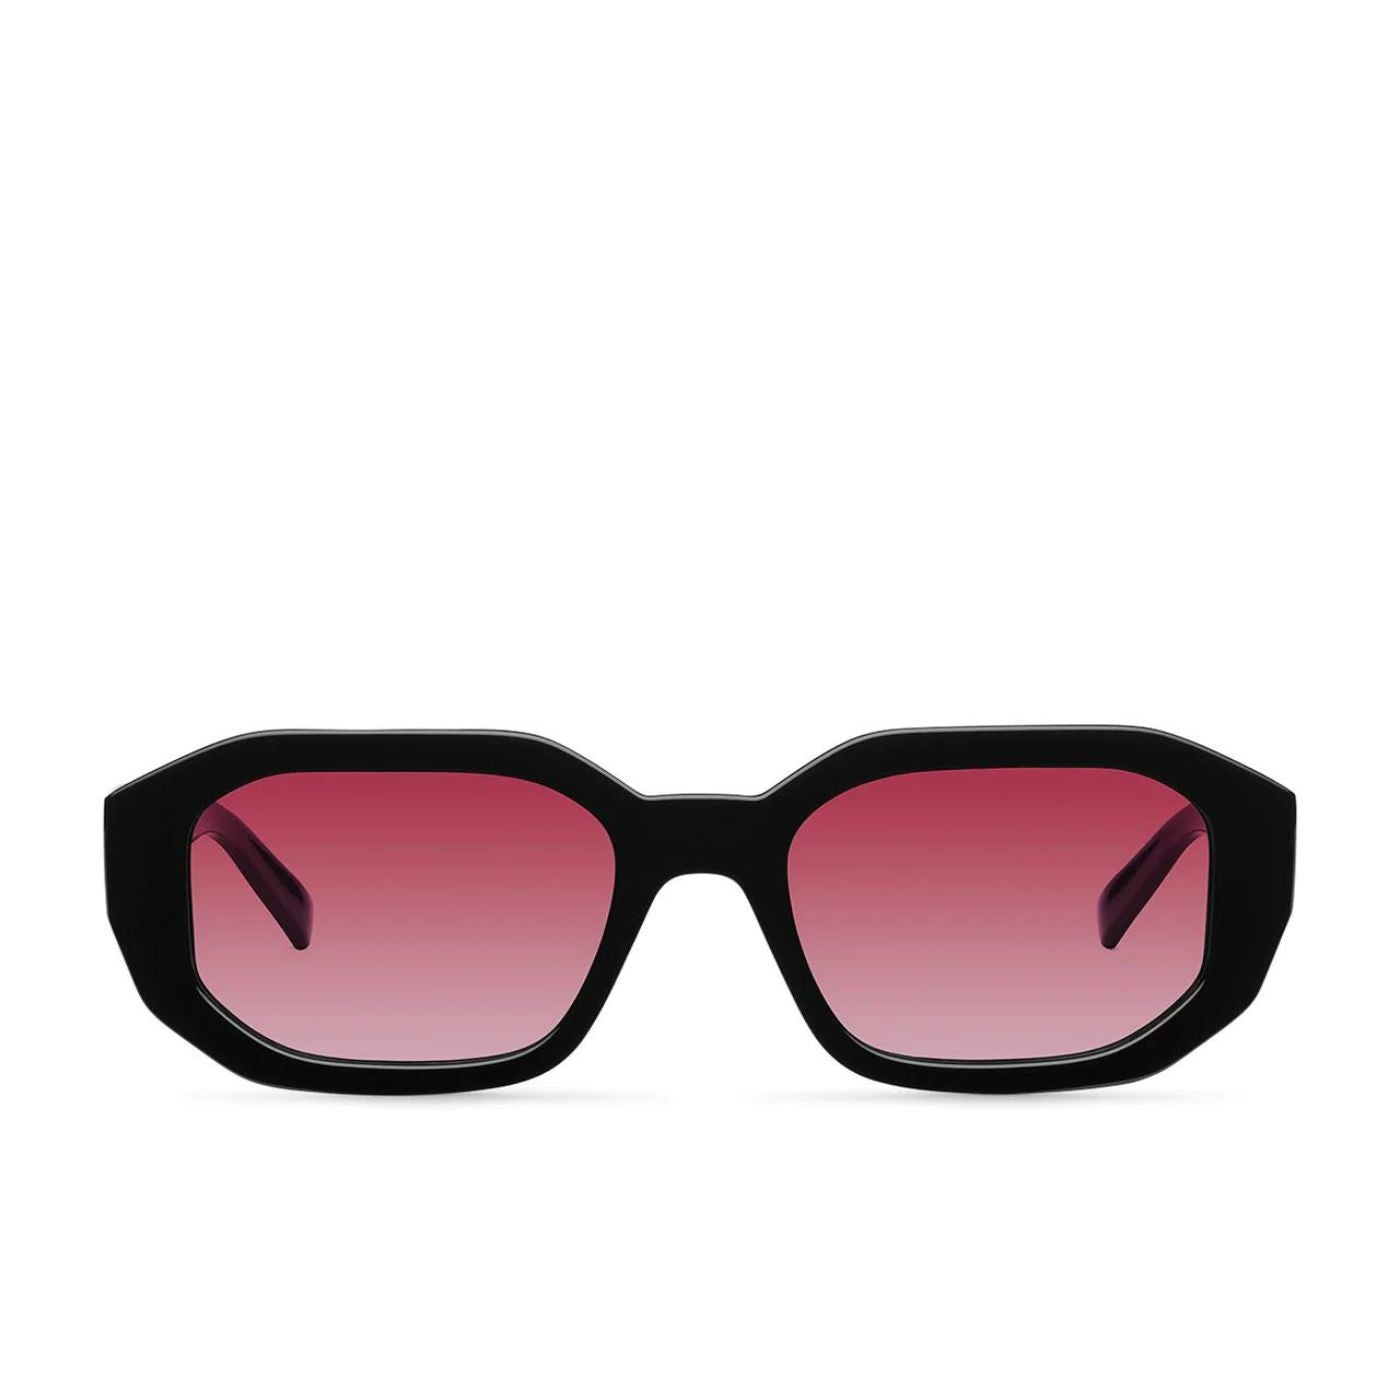 Kessie Black Amaranth Meller sunglasses